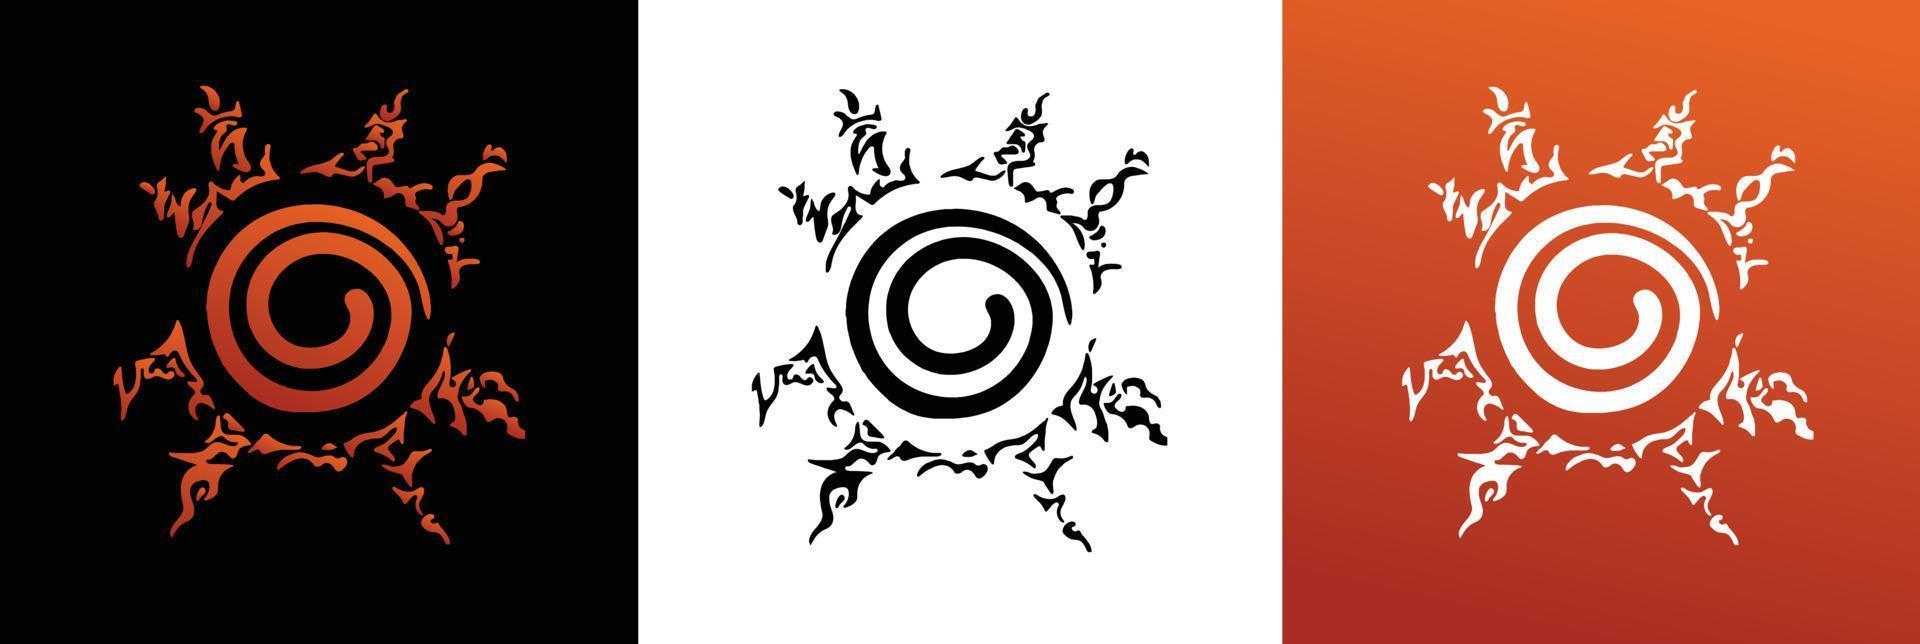 Spiral curse mark silhouette in three frames vector